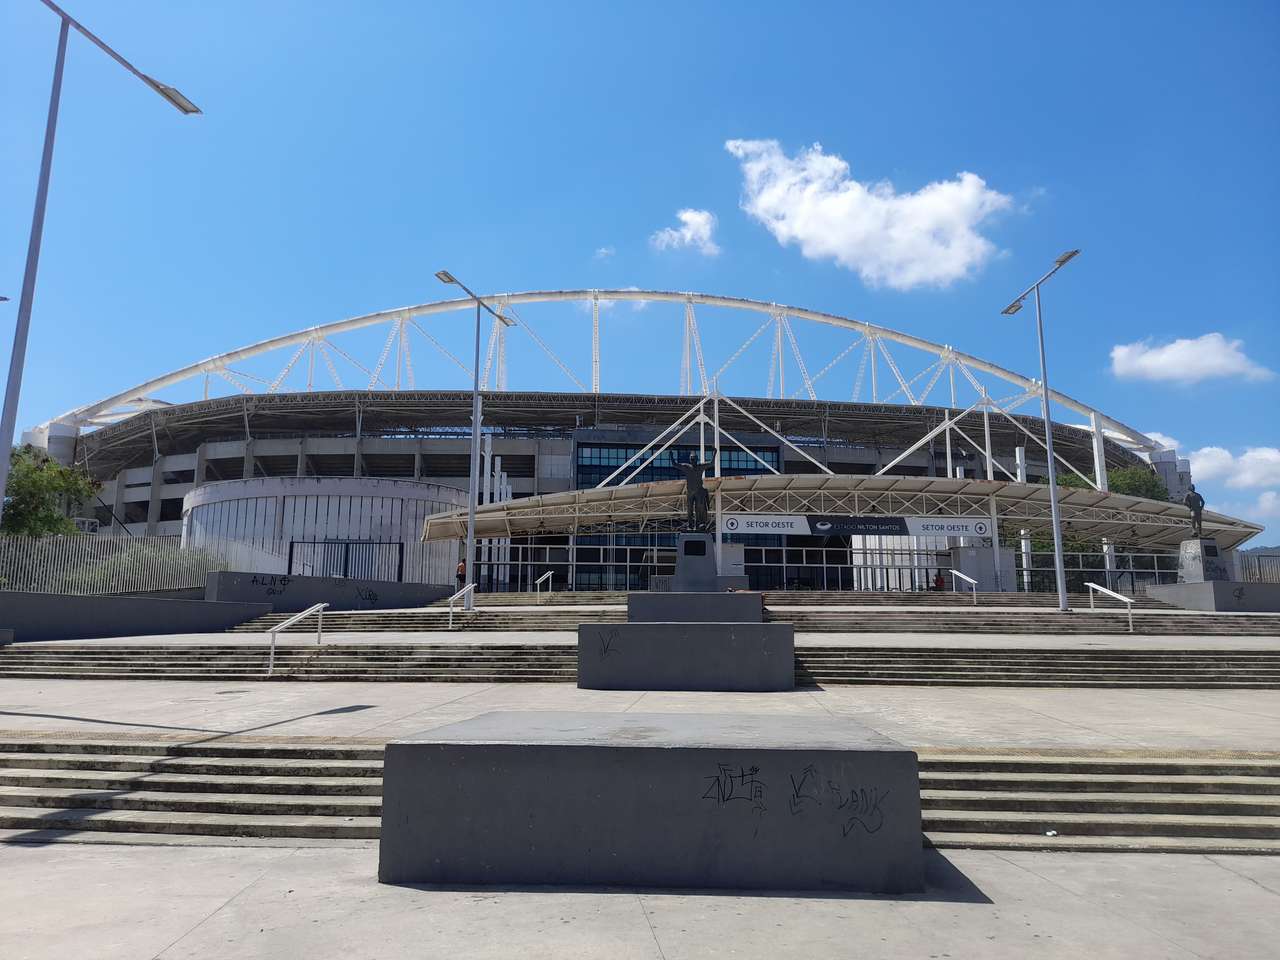 Hlavní přístup na stadion Botafogo v Rio de Janeiru online puzzle